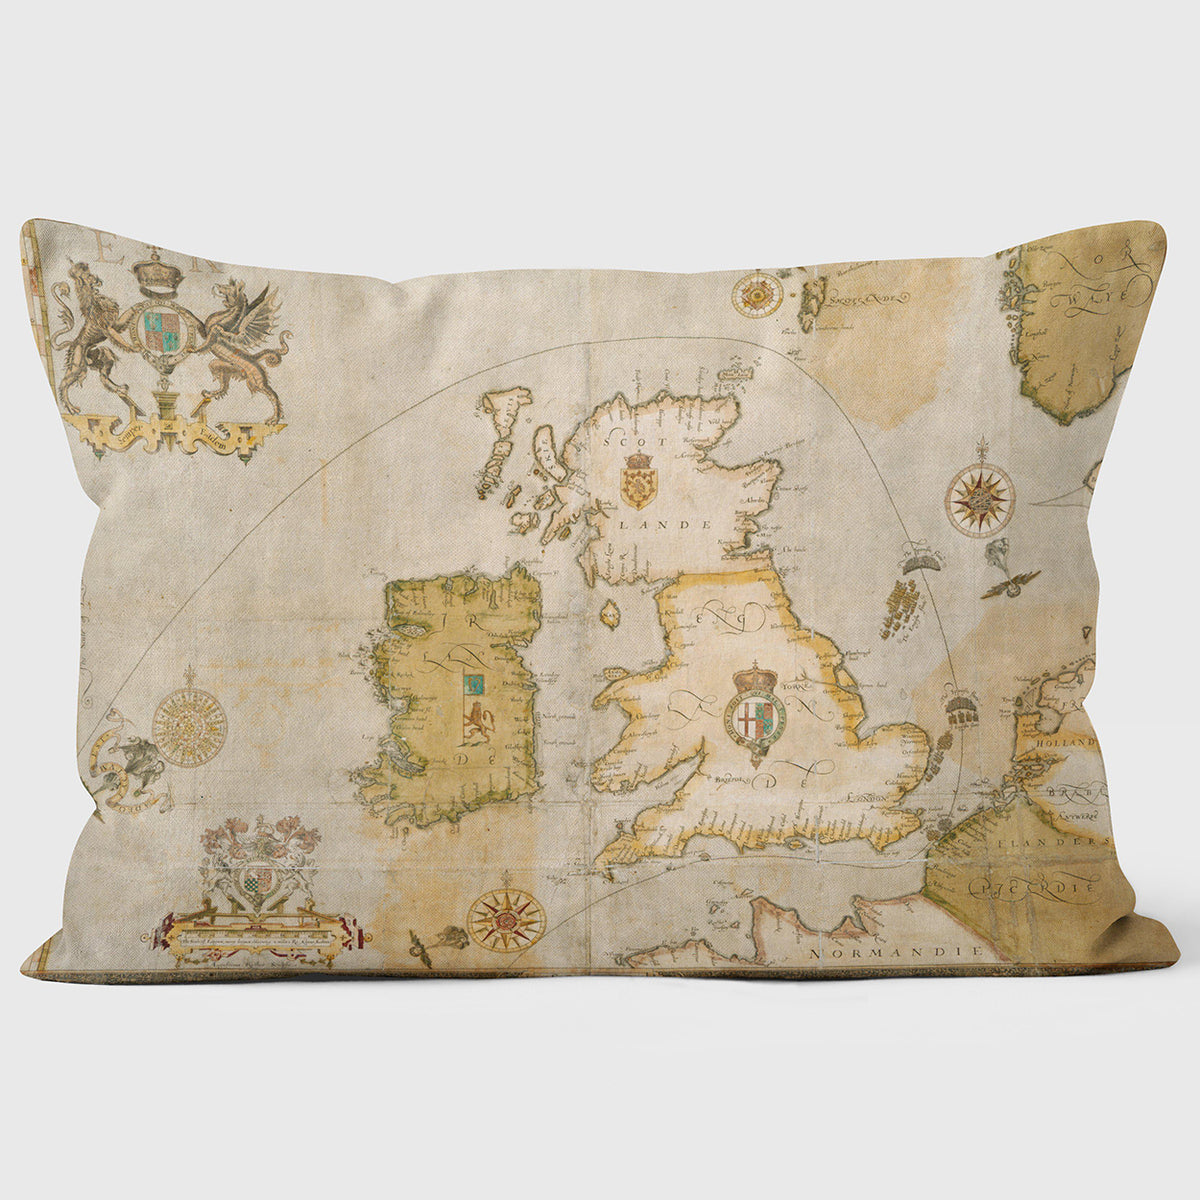 1588 Spanish Armada Route Map Cushion